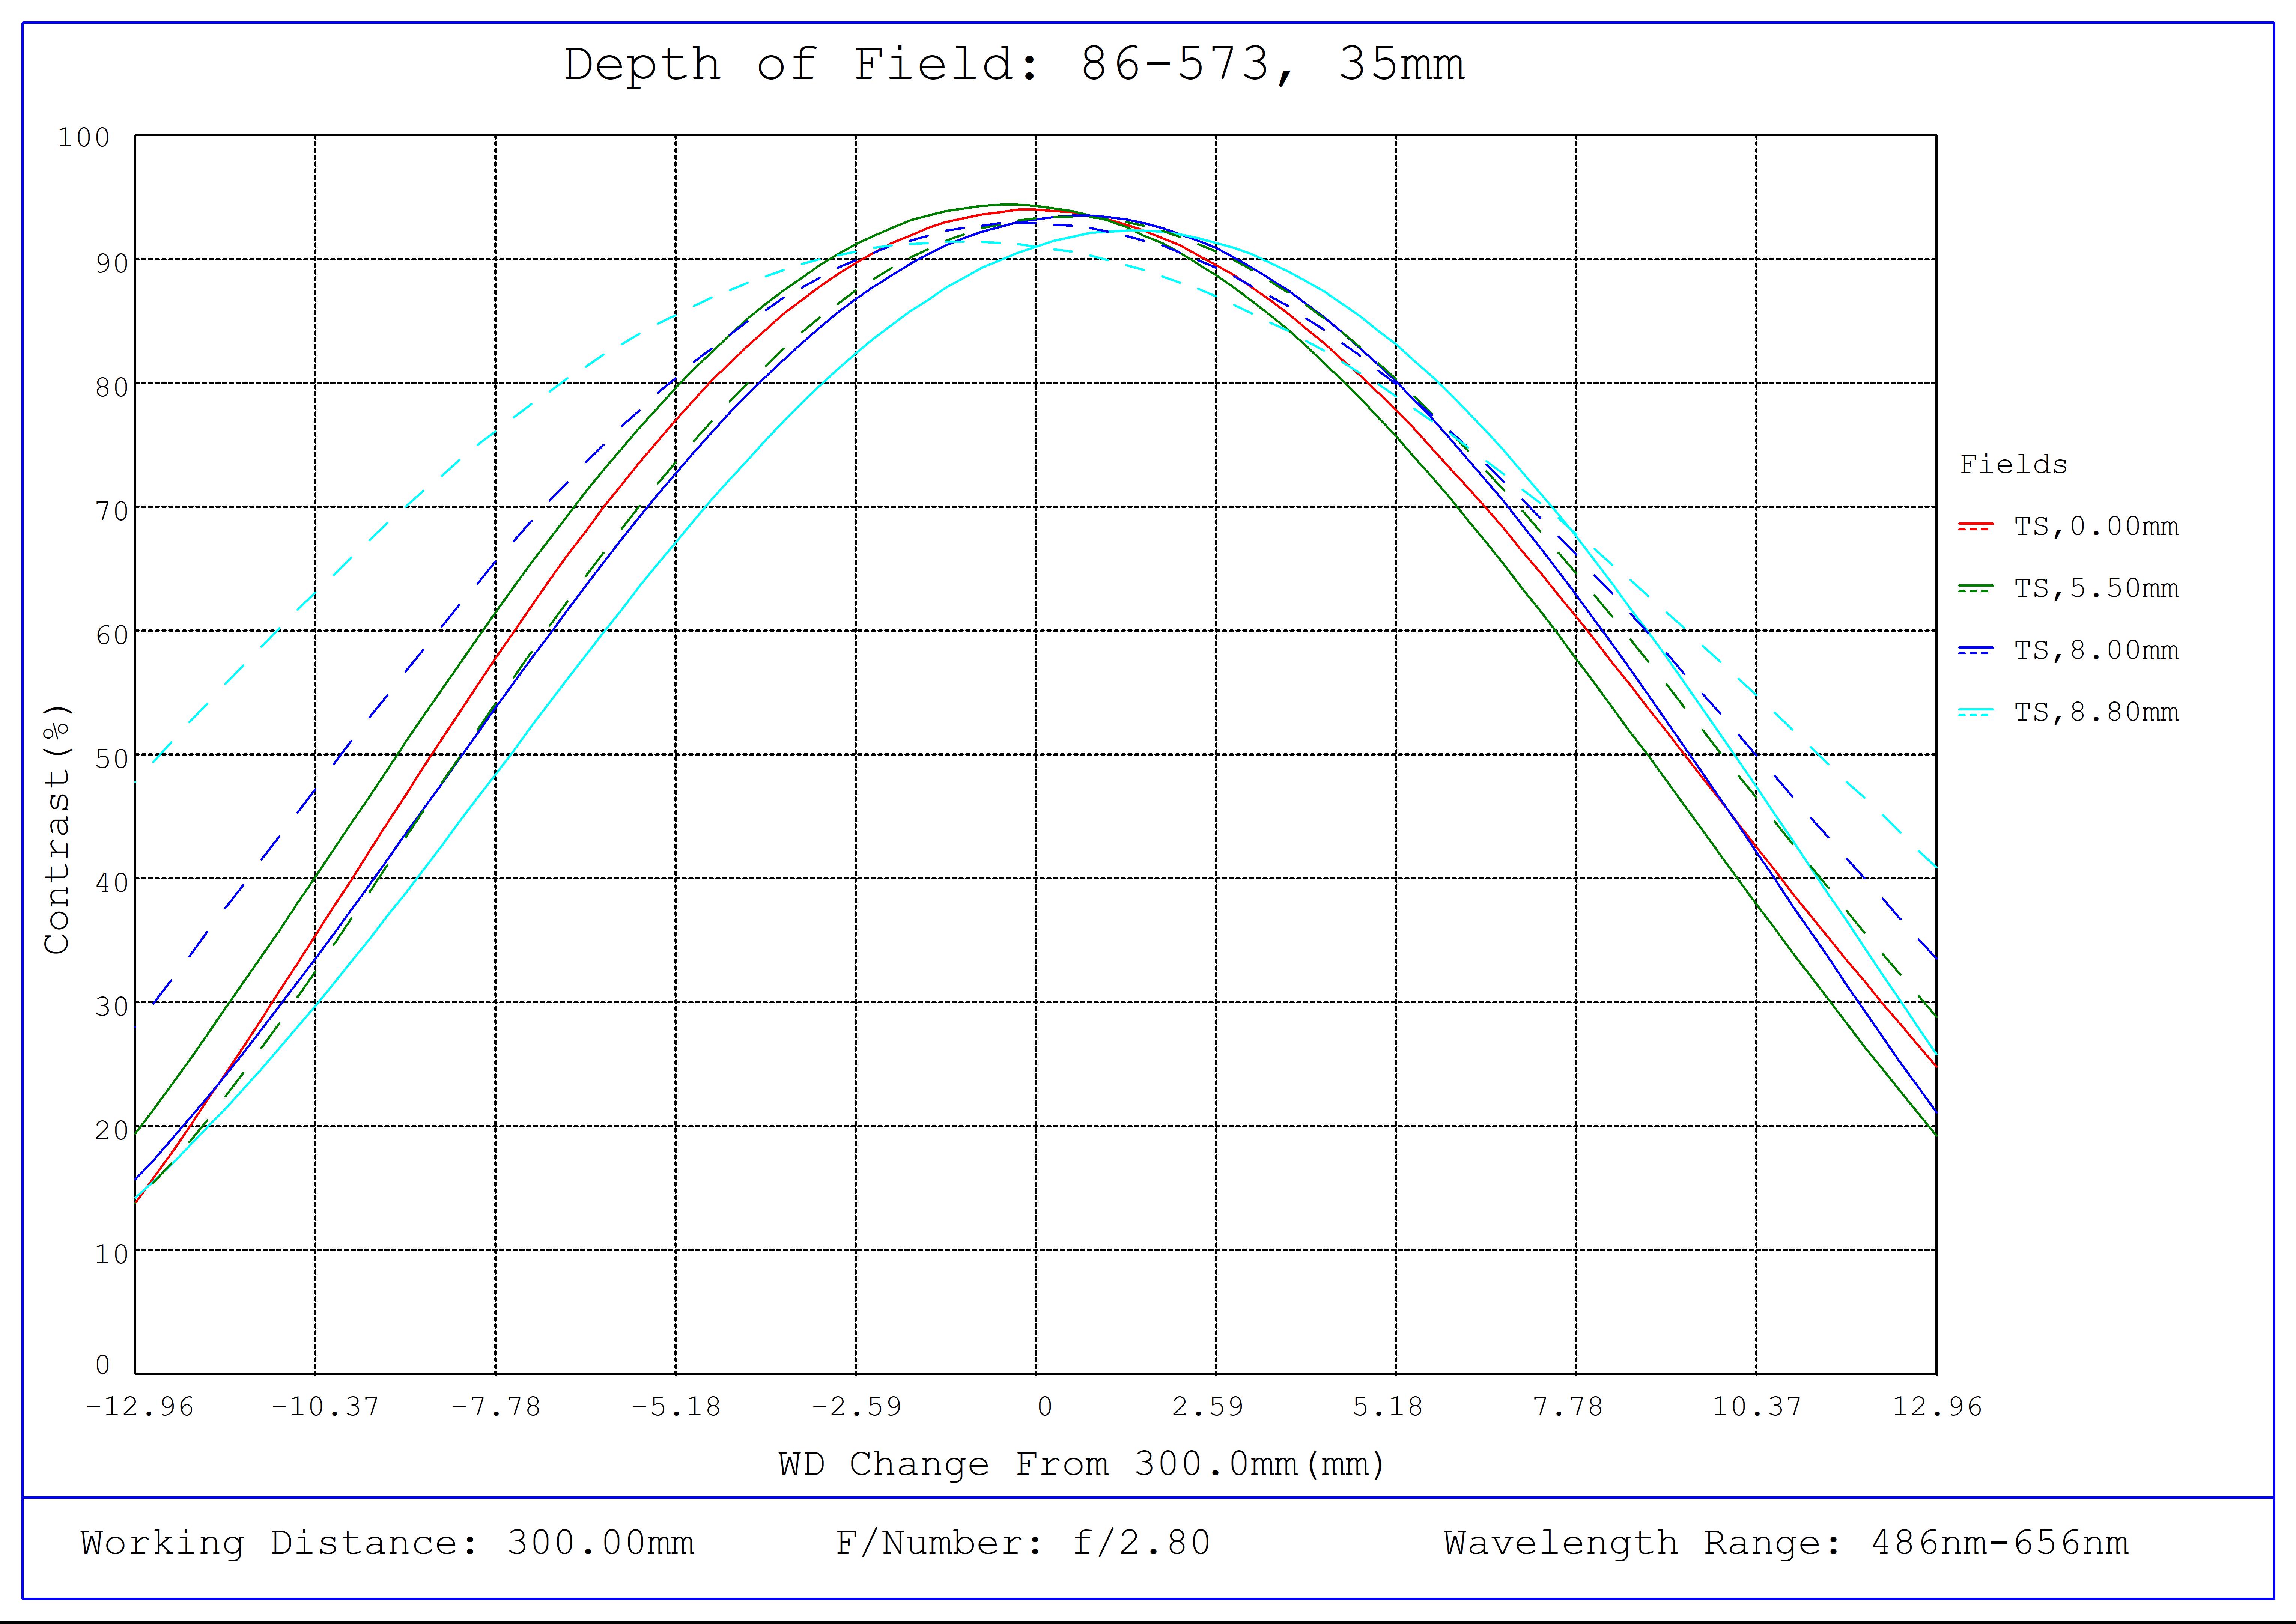 #86-573, 35mm Focal Length, HP Series Fixed Focal Length Lens, Depth of Field Plot, 300mm Working Distance, f2.8